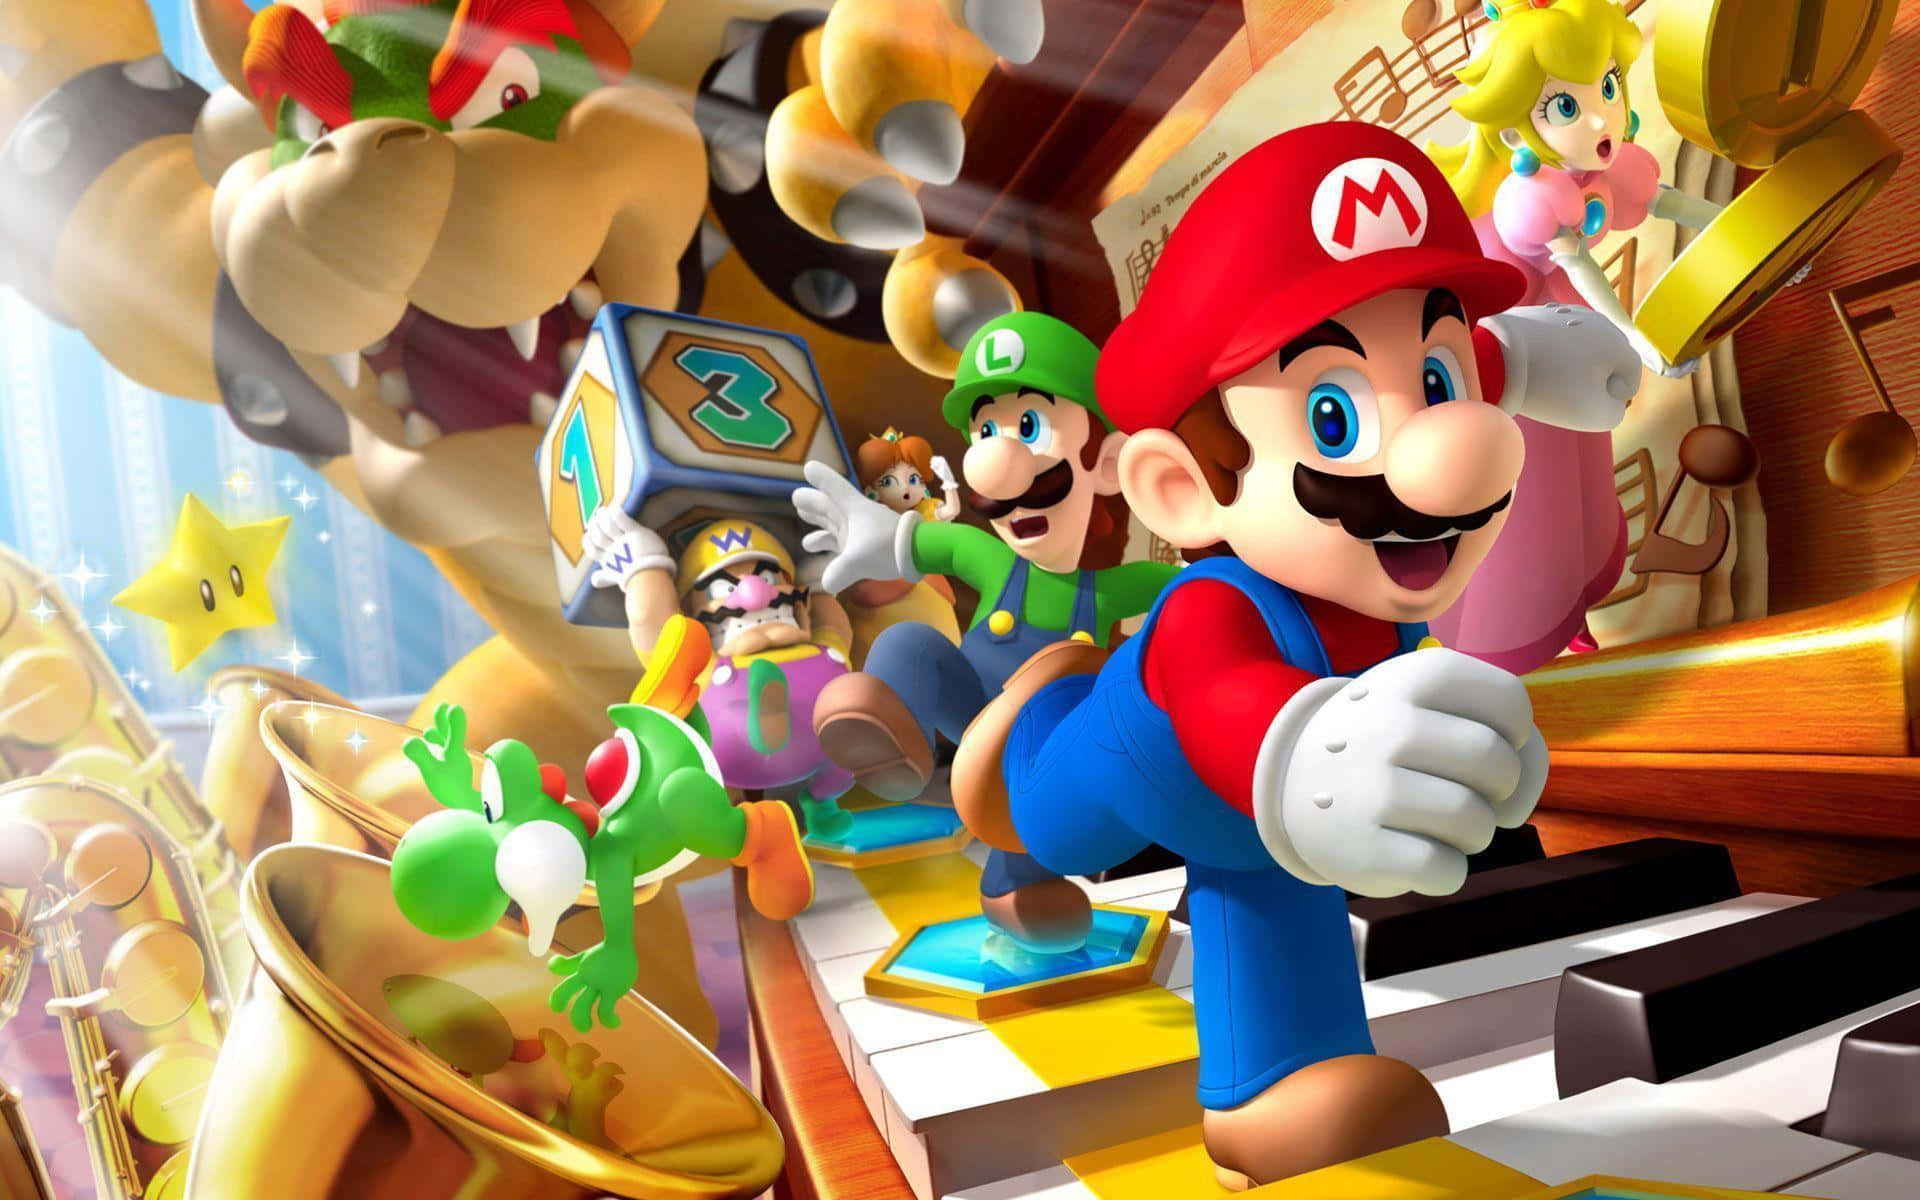 Mario and Luigi team up to protect their Mushroom Kingdom